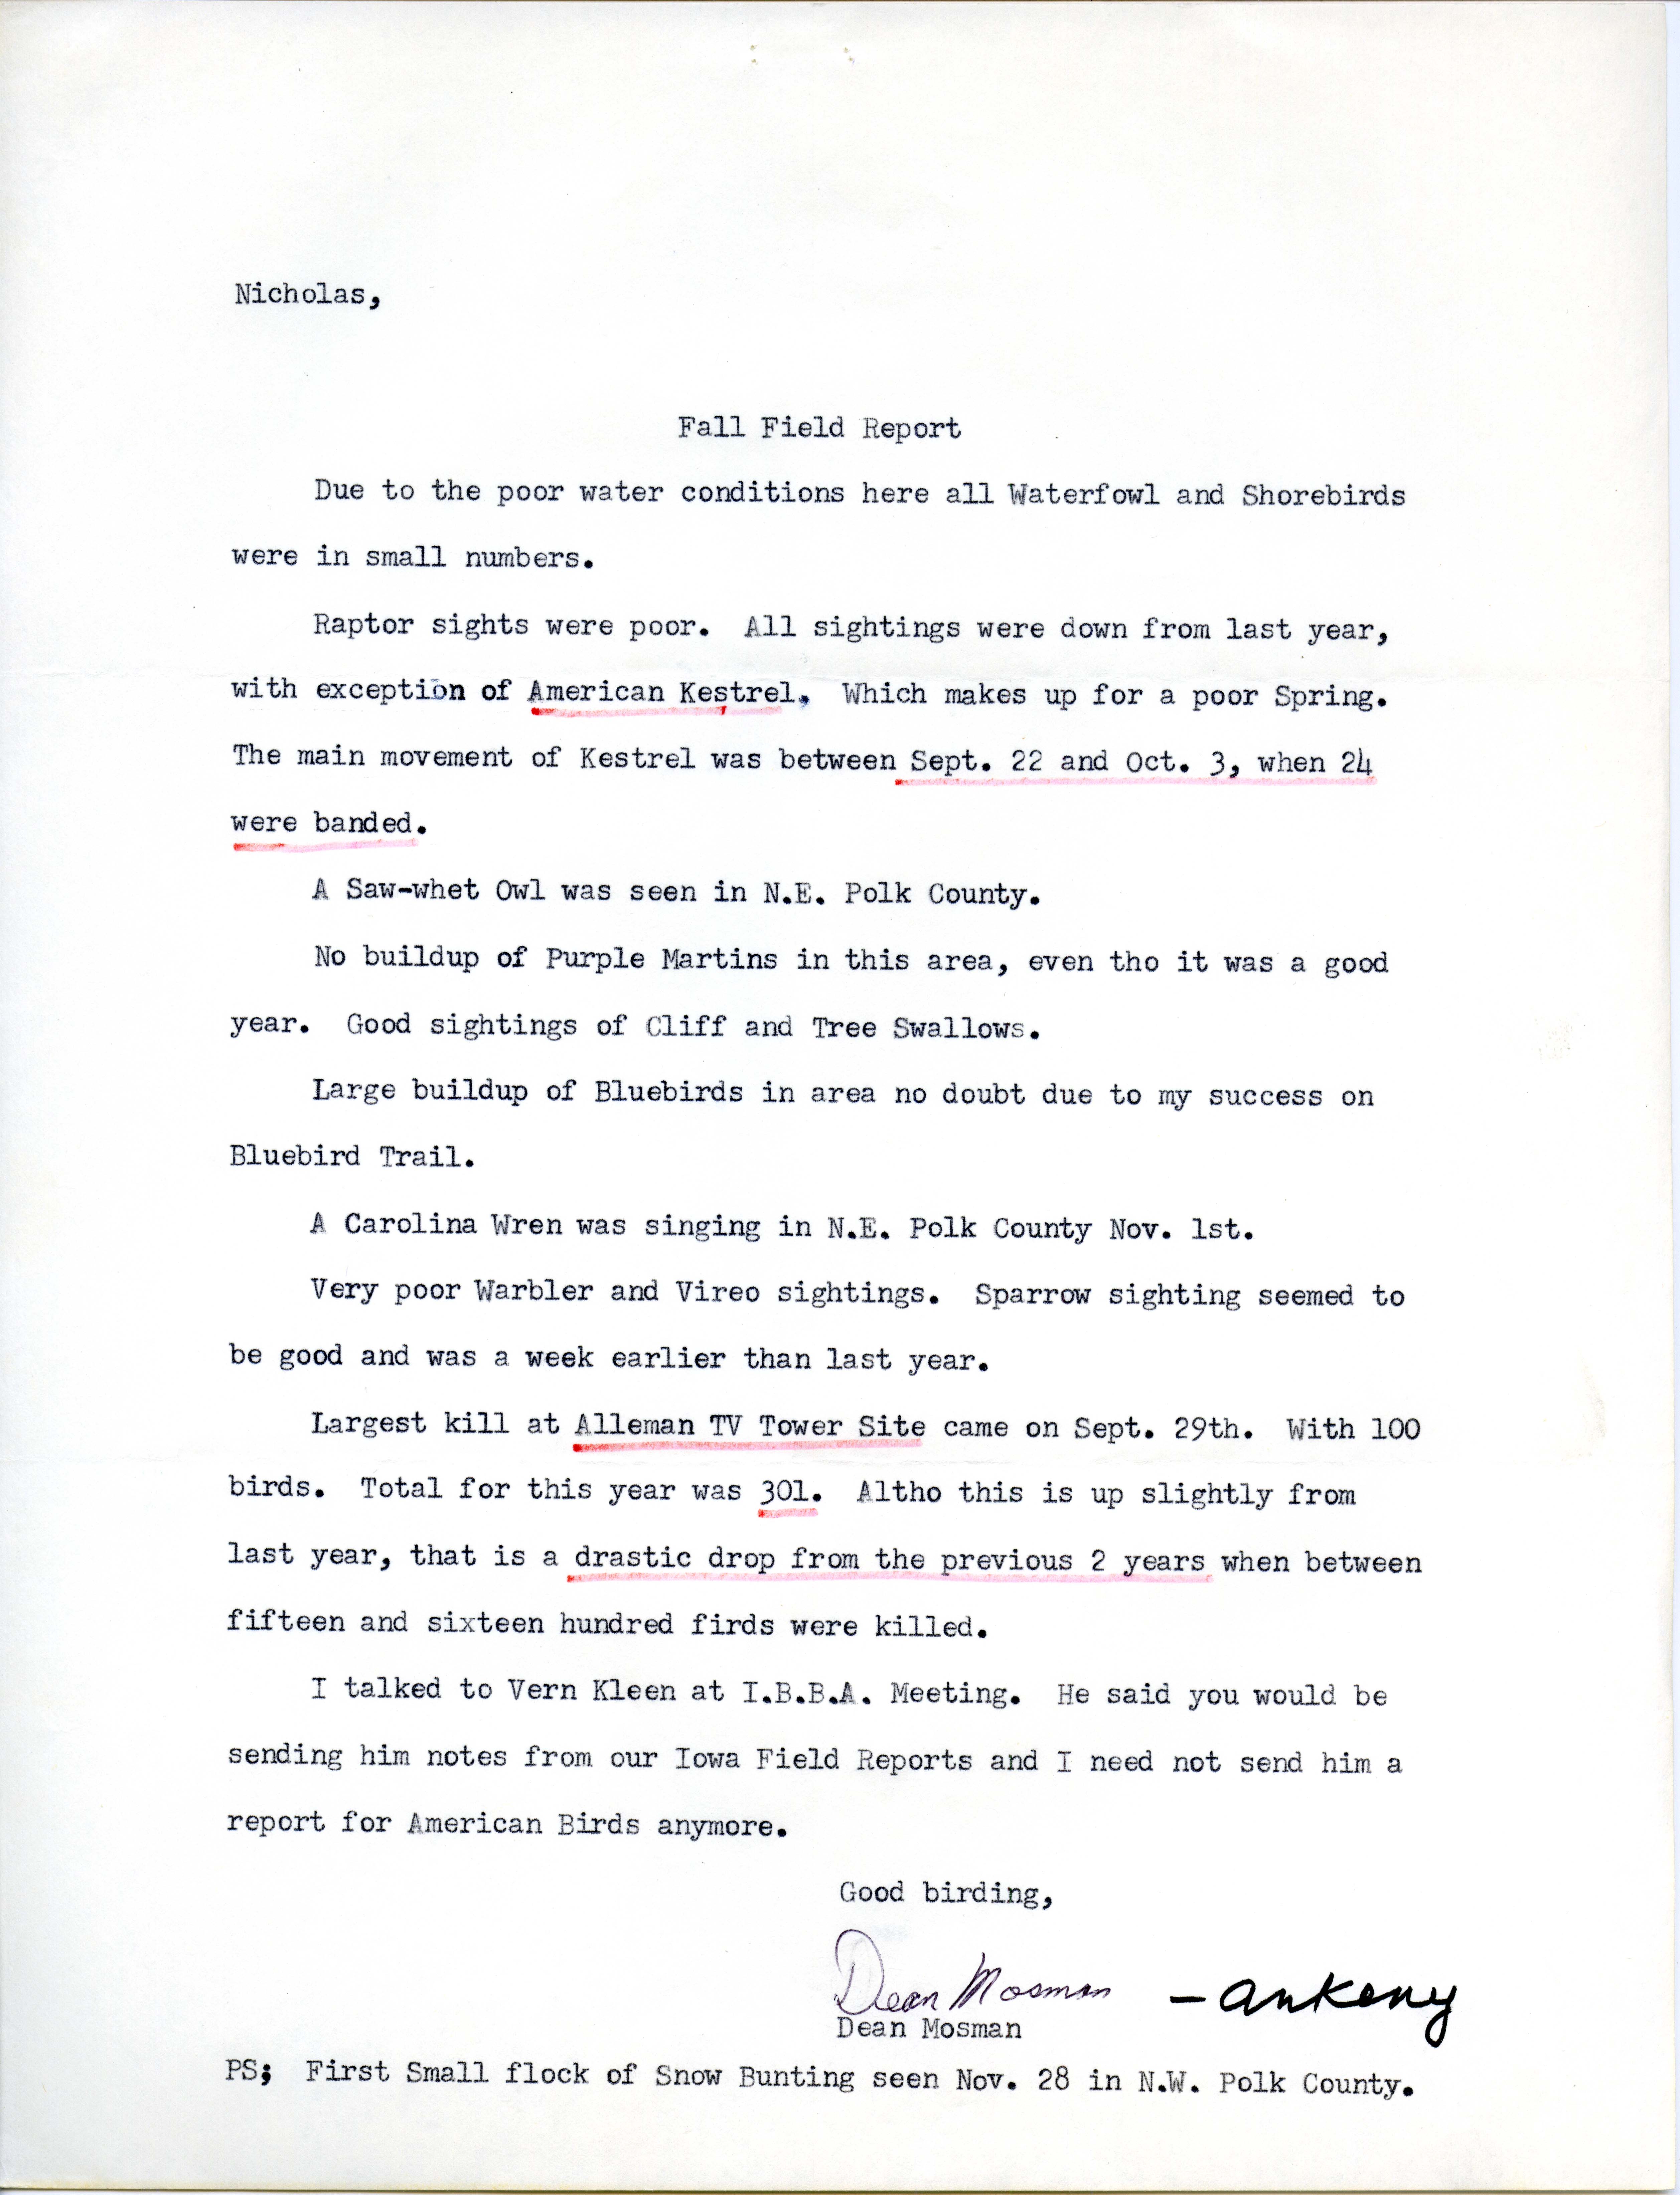 Dean Mosman letter to Nicholas S. Halmi regarding fall migration, 1976